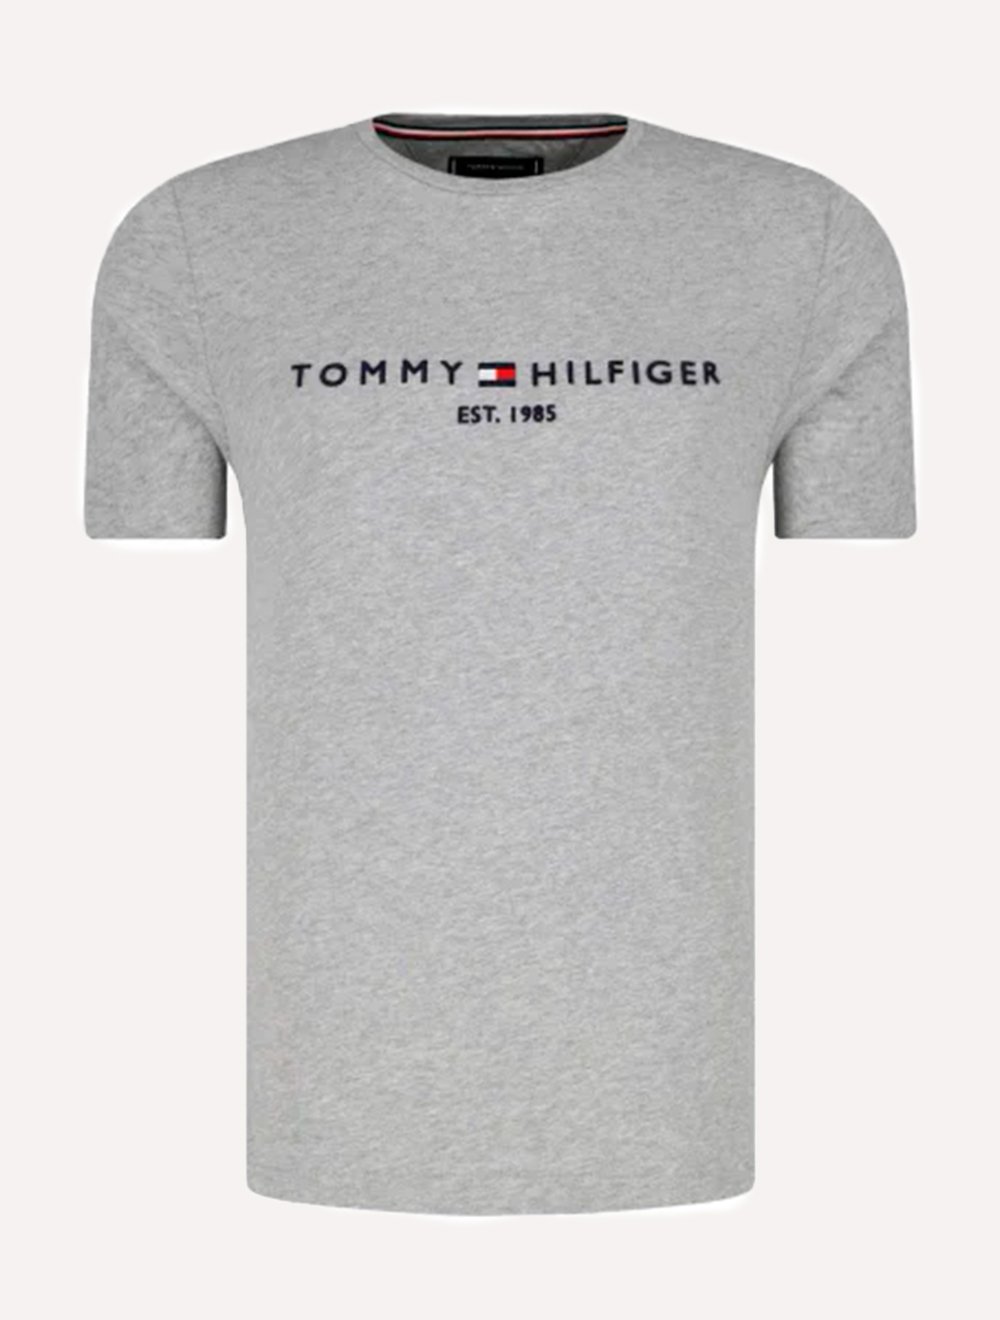 Camiseta Tommy Hilfiger Masculina Core Logo Cinza Mescla